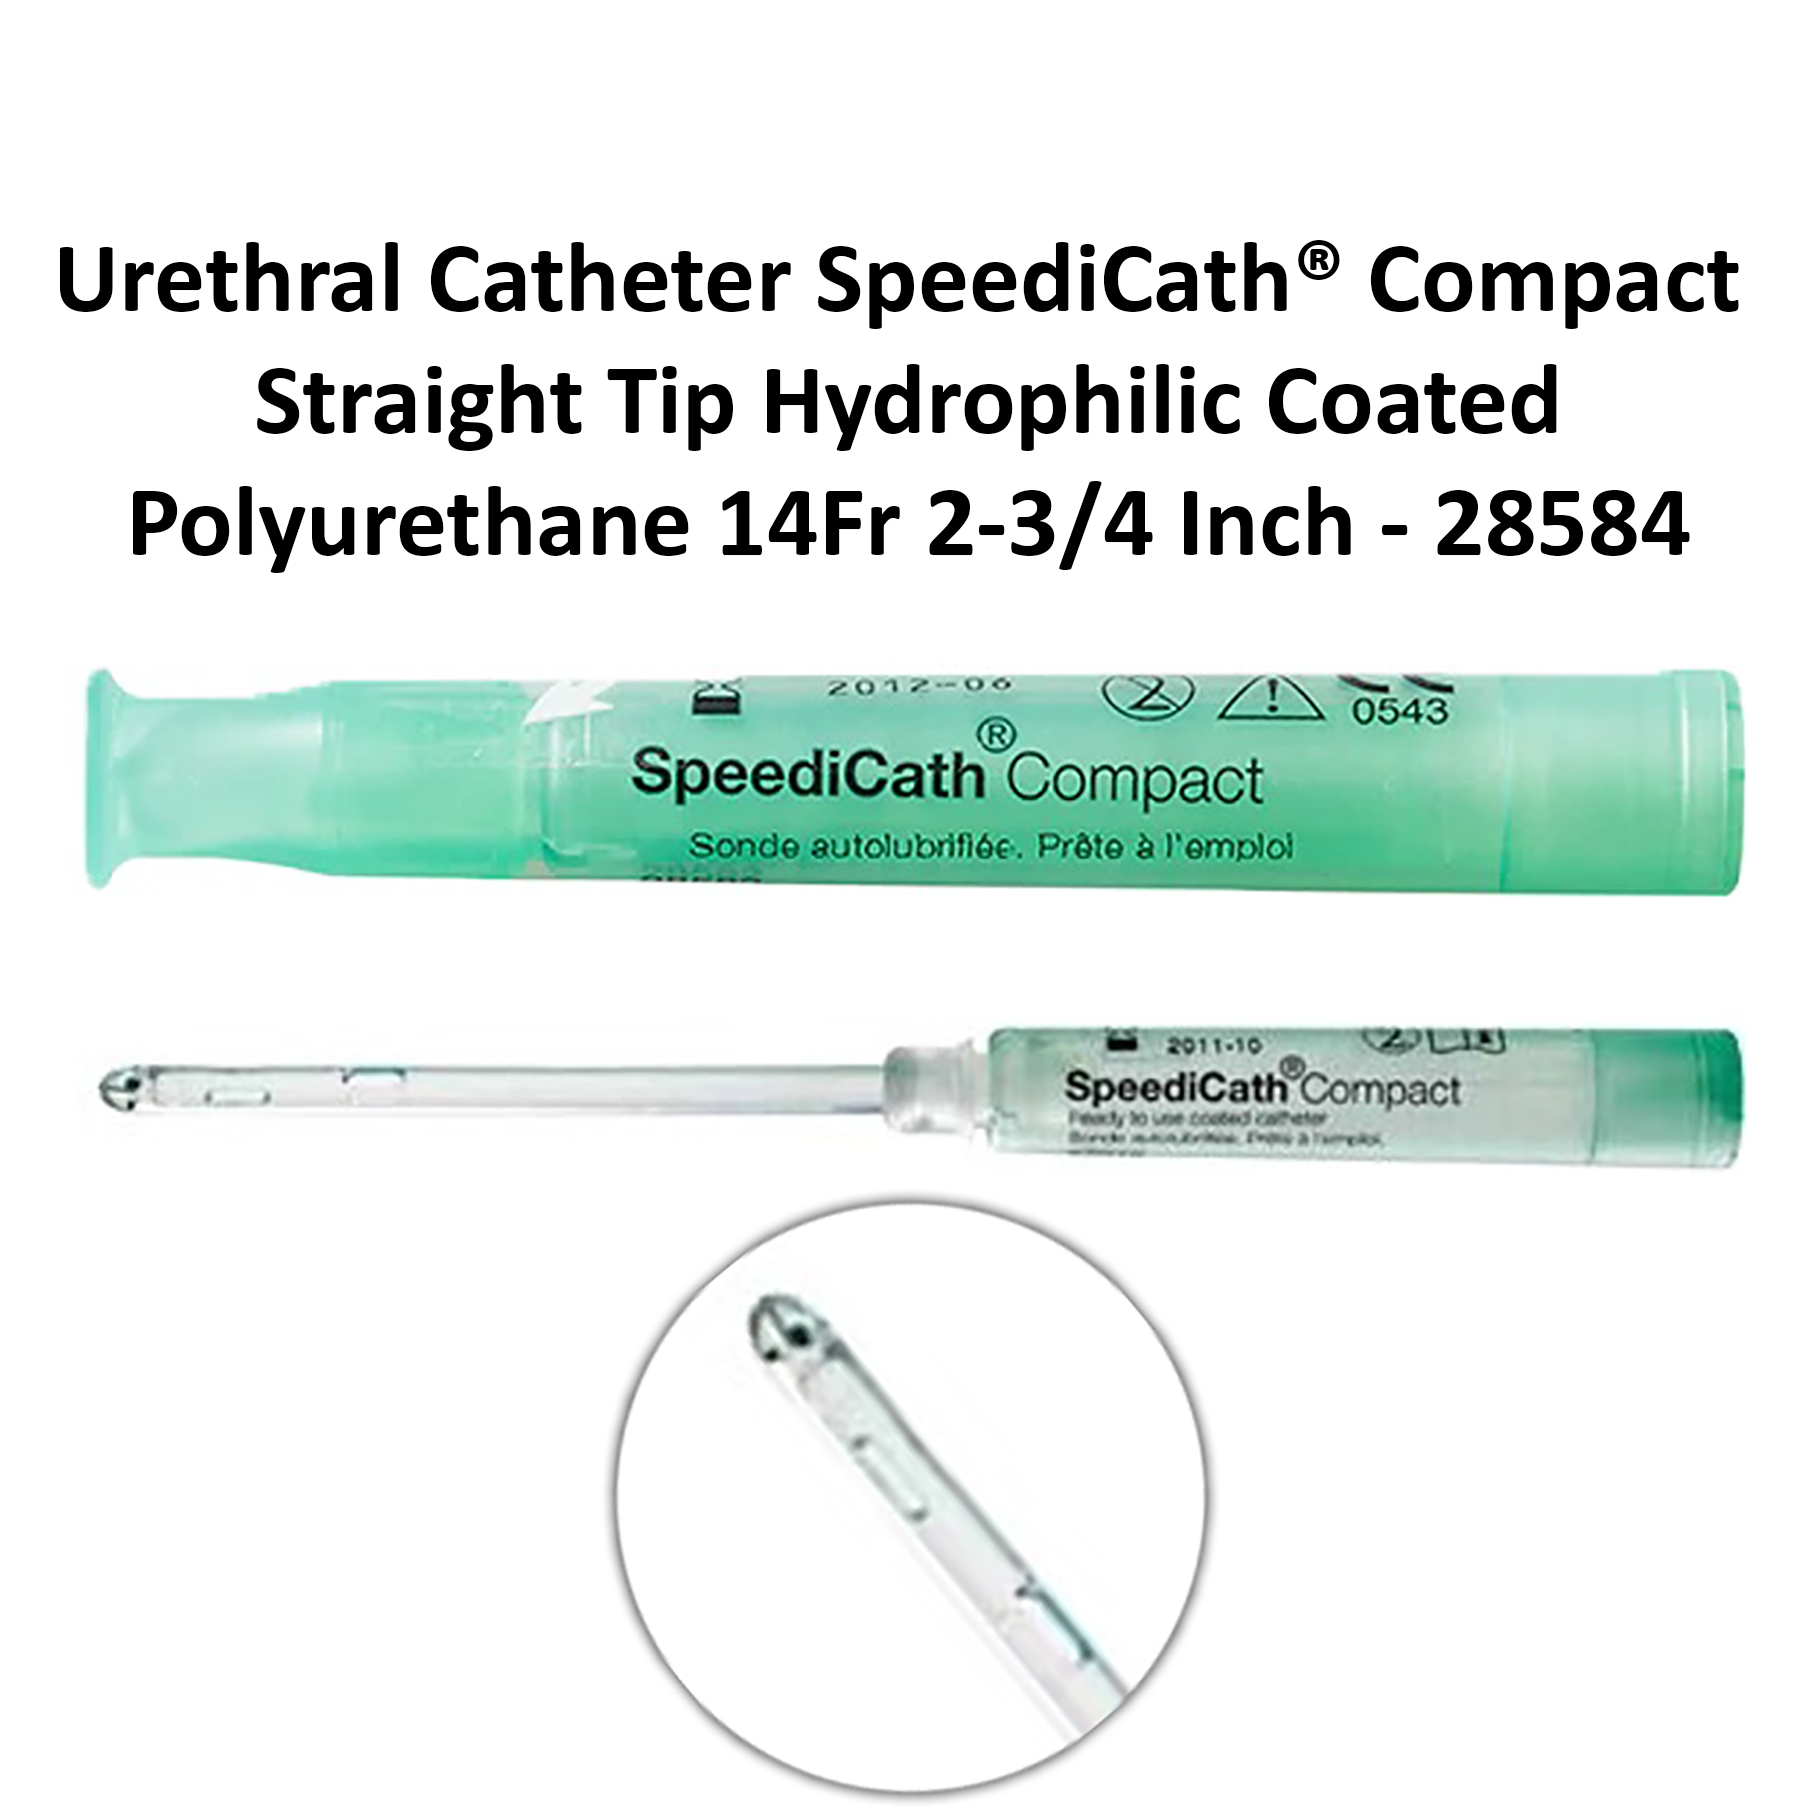 Urethral Catheter SpeediCath Compact 14Fr Straight Tip Hydrophilic Coated Polyurethane 2-3/4 Inch - 28584